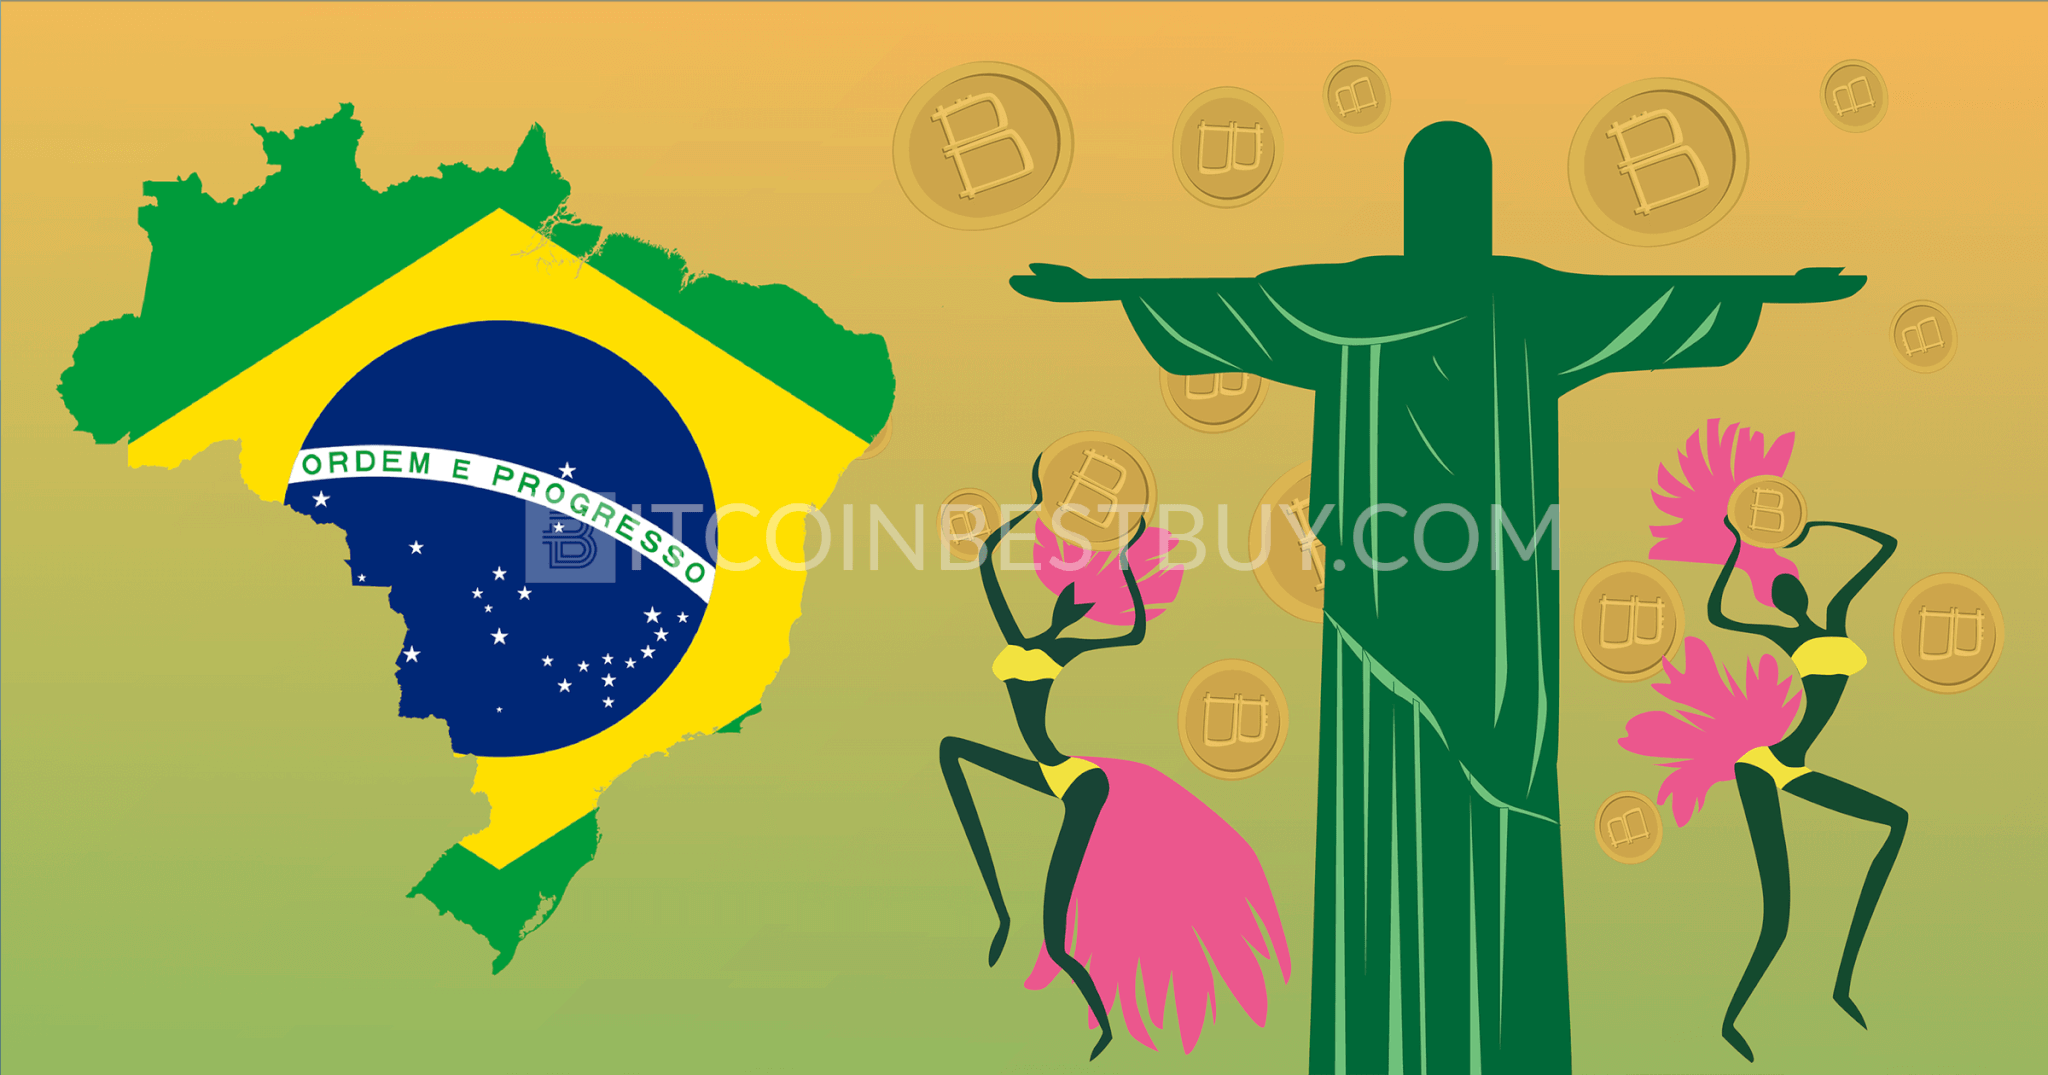 How to buy bitcoin in Brazil